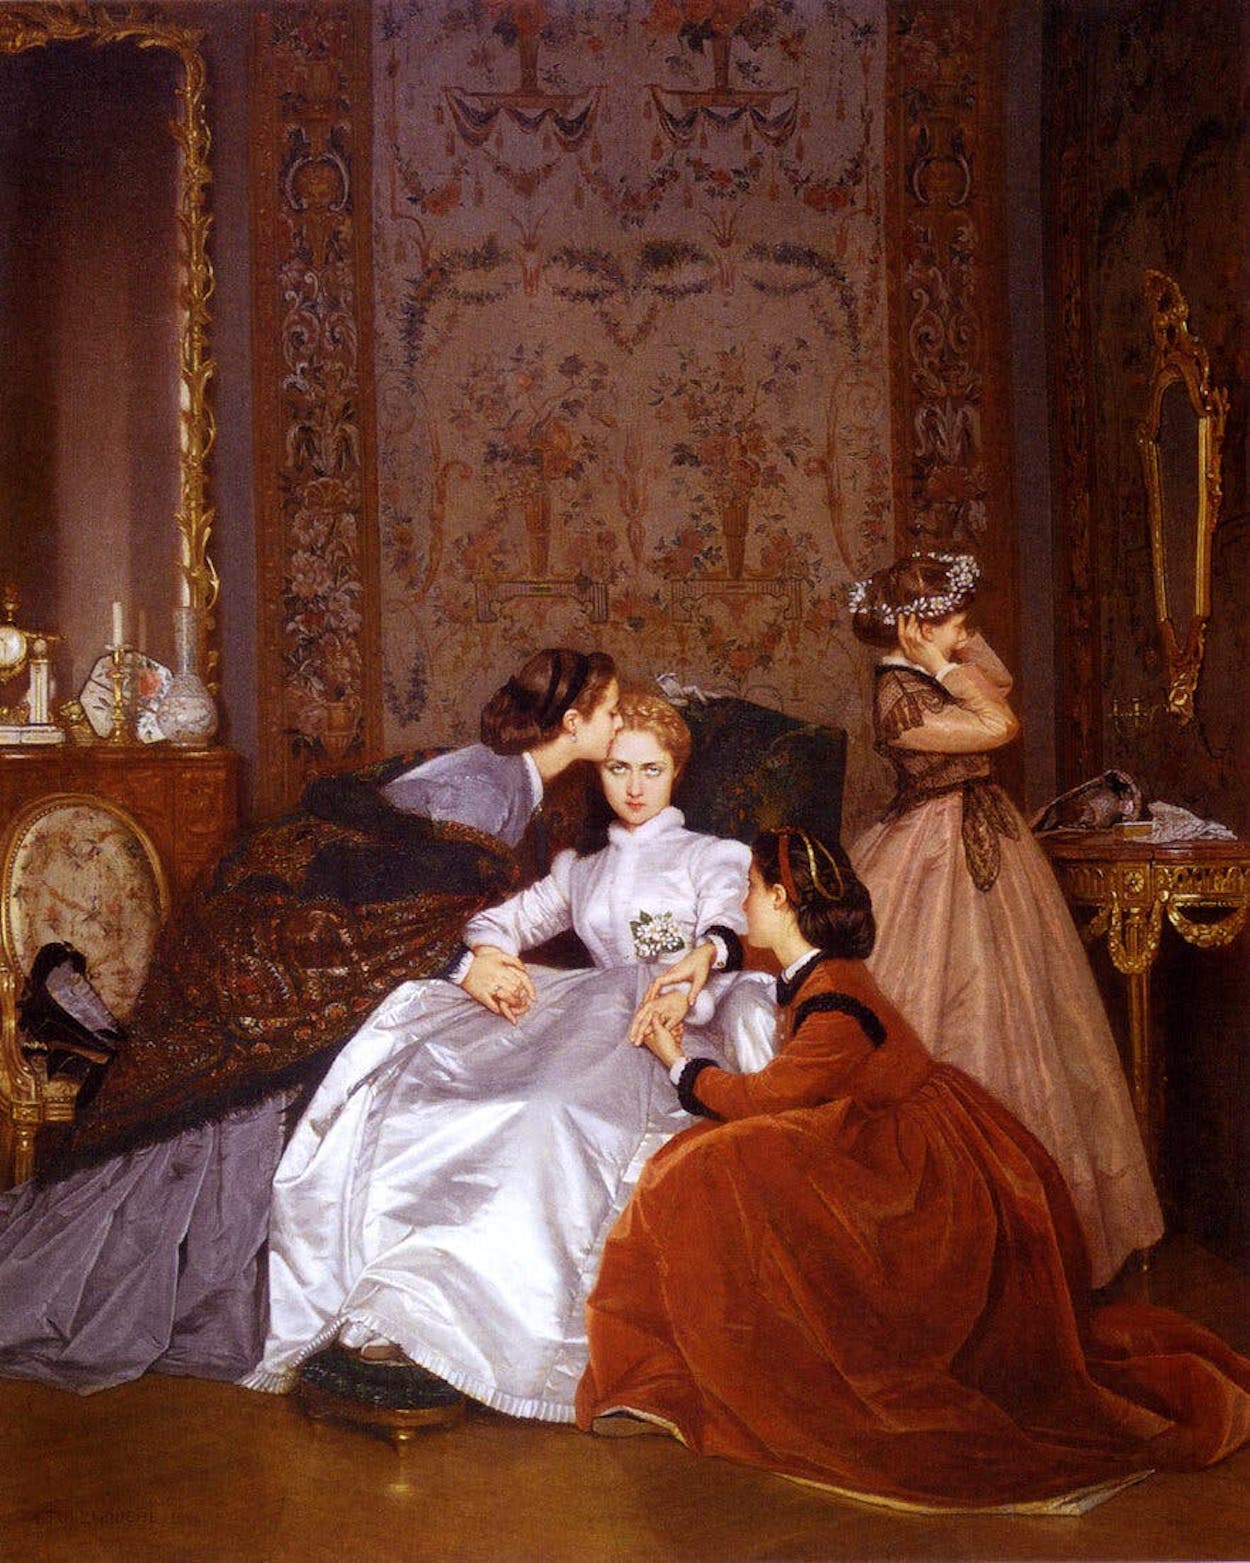 A vonakodó menyasszony by Auguste Toulmouche - 1866 - 65 x 54 cm 